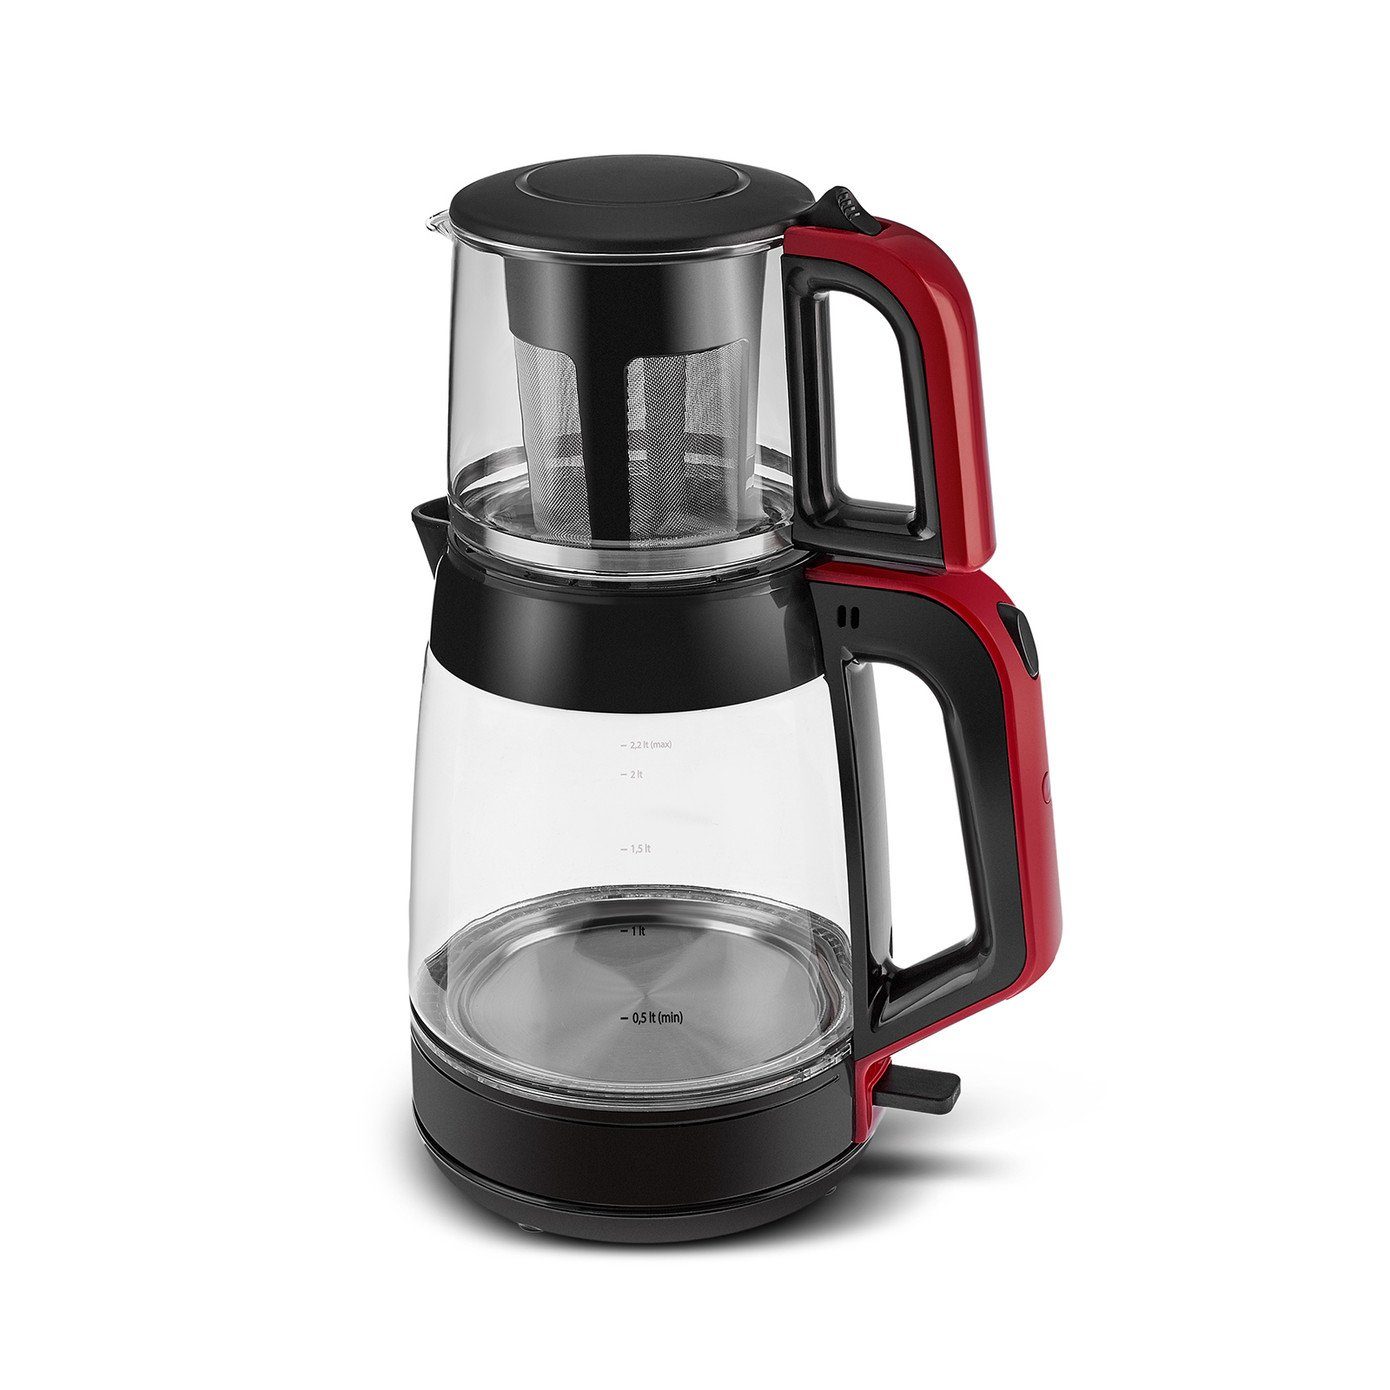 Karaca Wasser-/Teekocher Karaca Glass Tea XL 2in1 Glas Teemaschine Rot, XL-Kapazität, Warmhalt